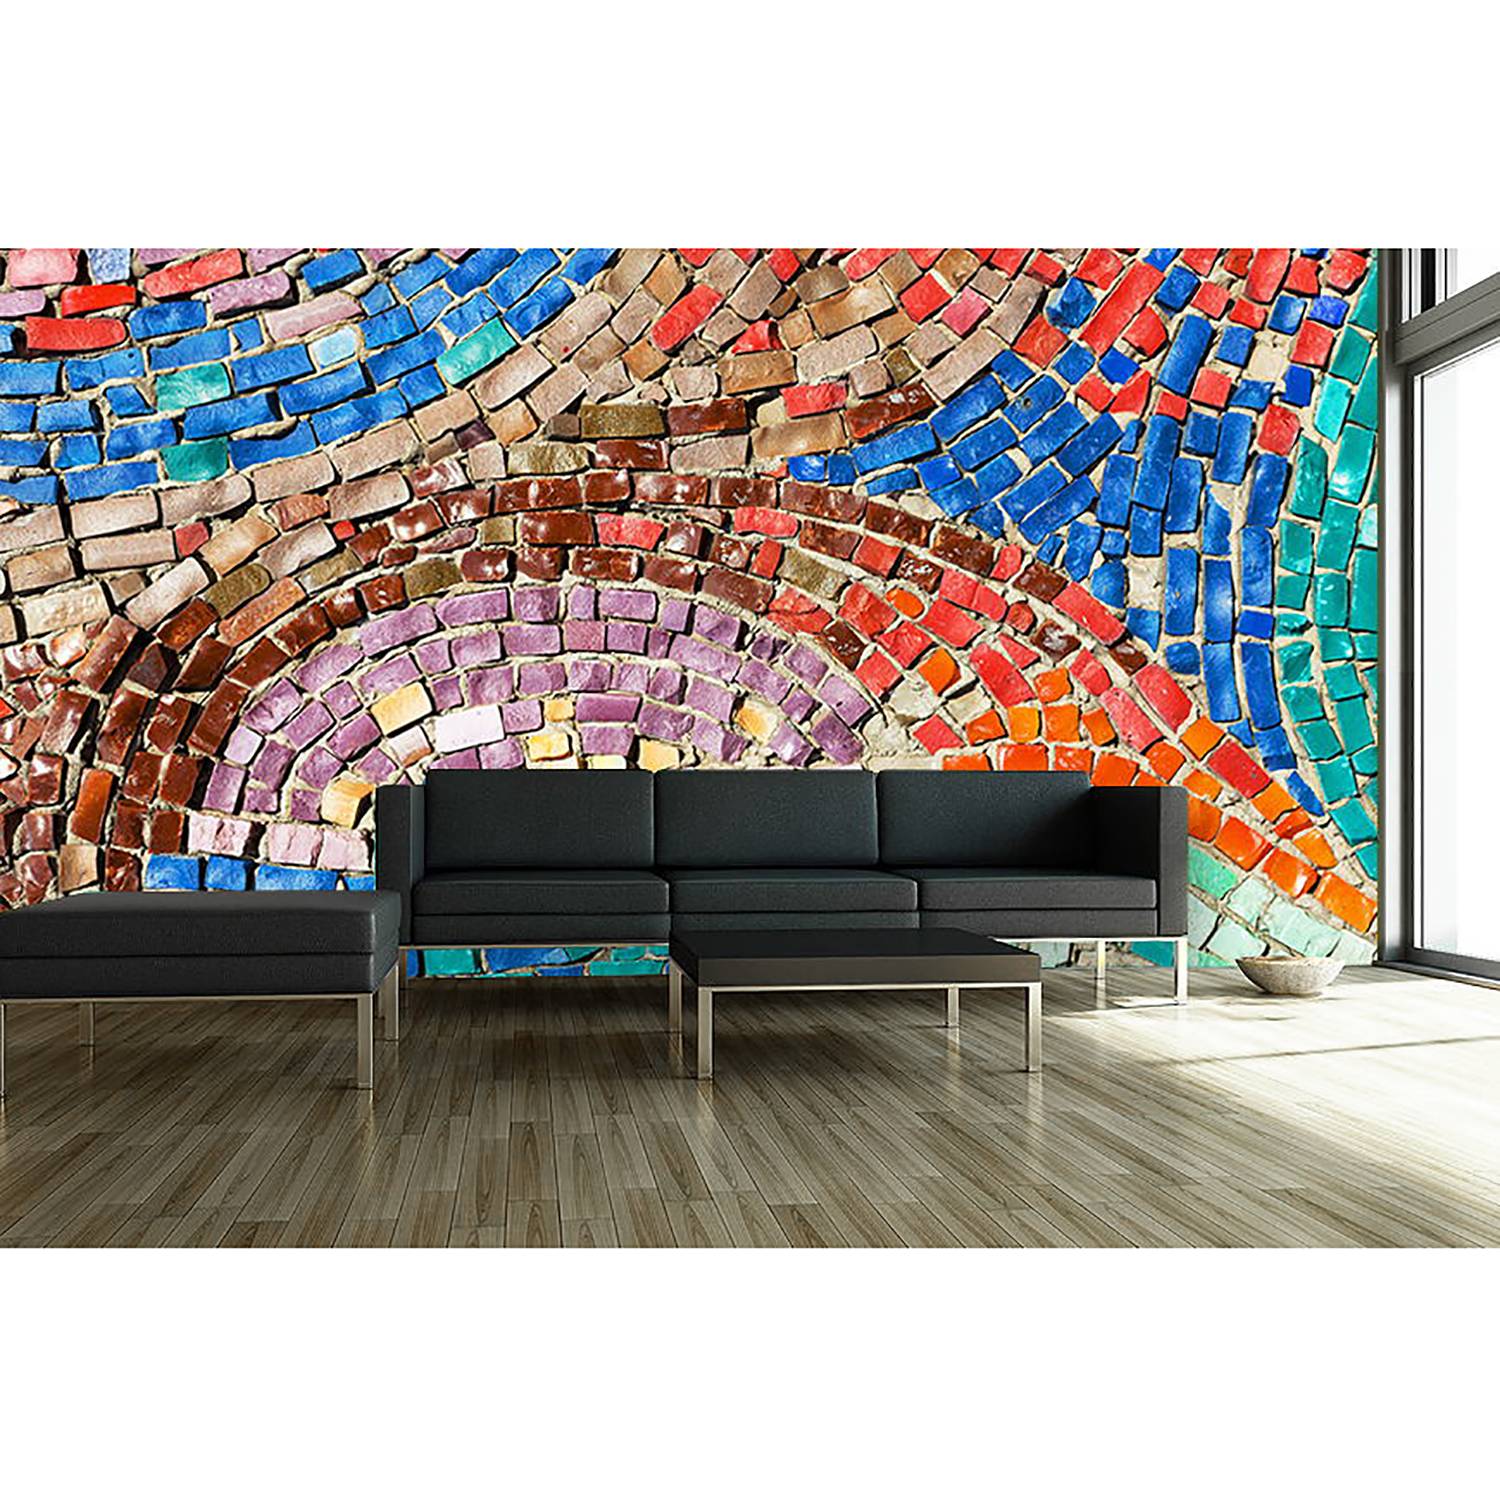 Vliestapete Colorful Mosaic von WandbilderXXL